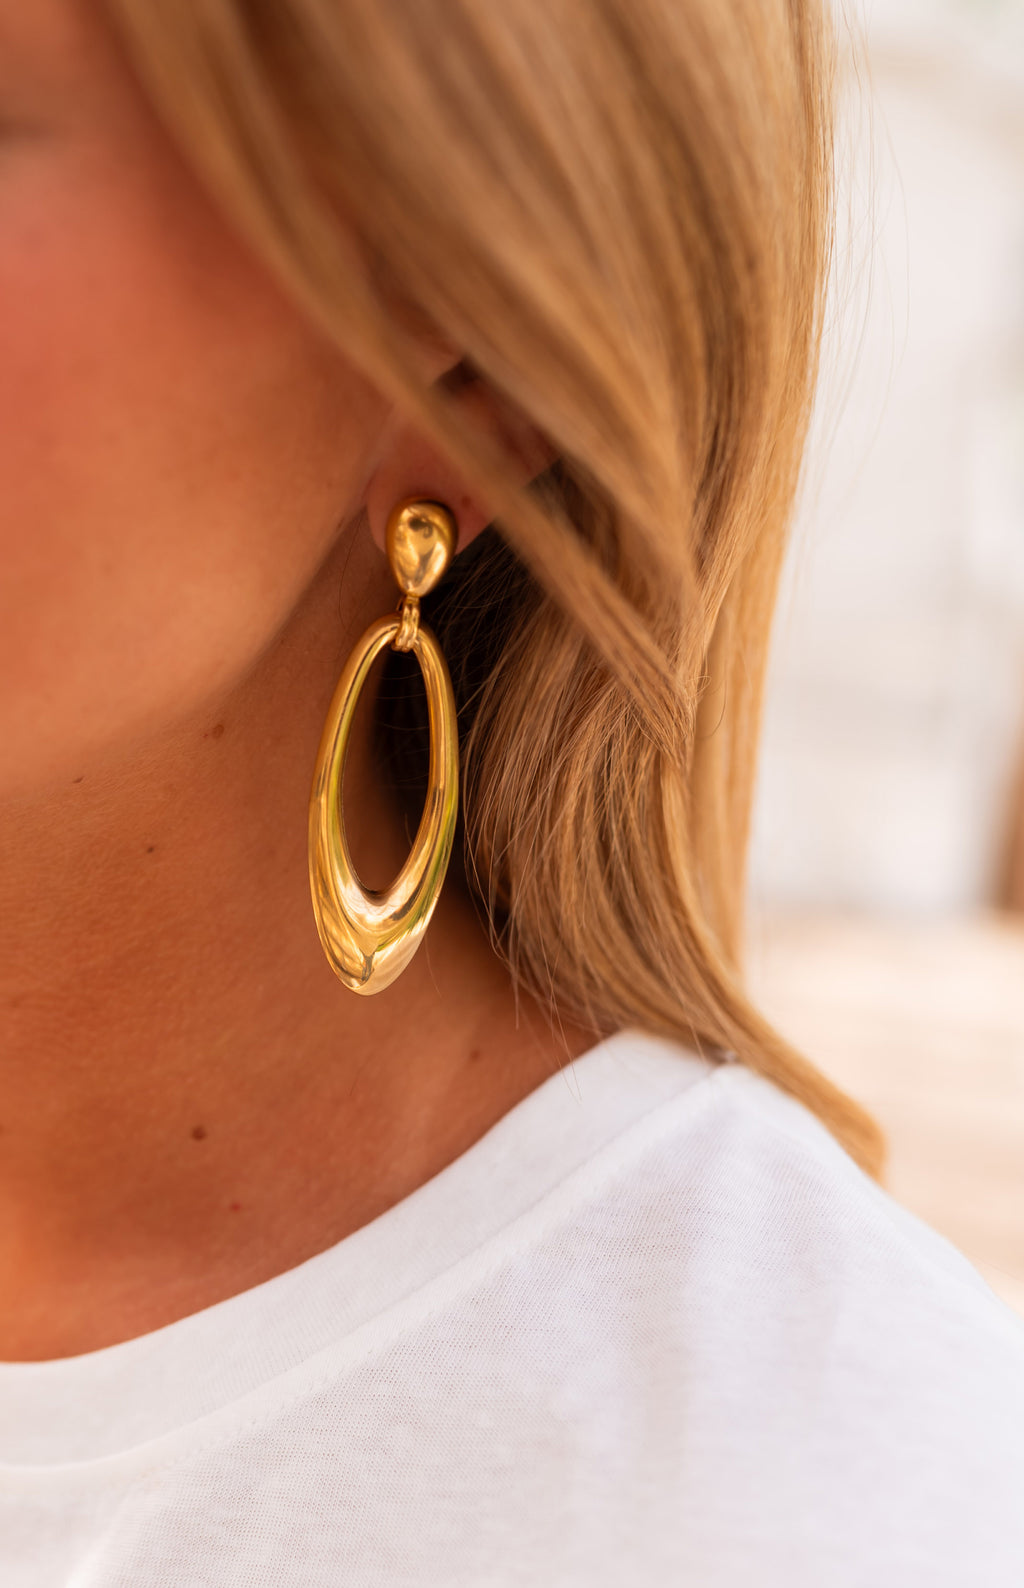 Pietro earrings - golden